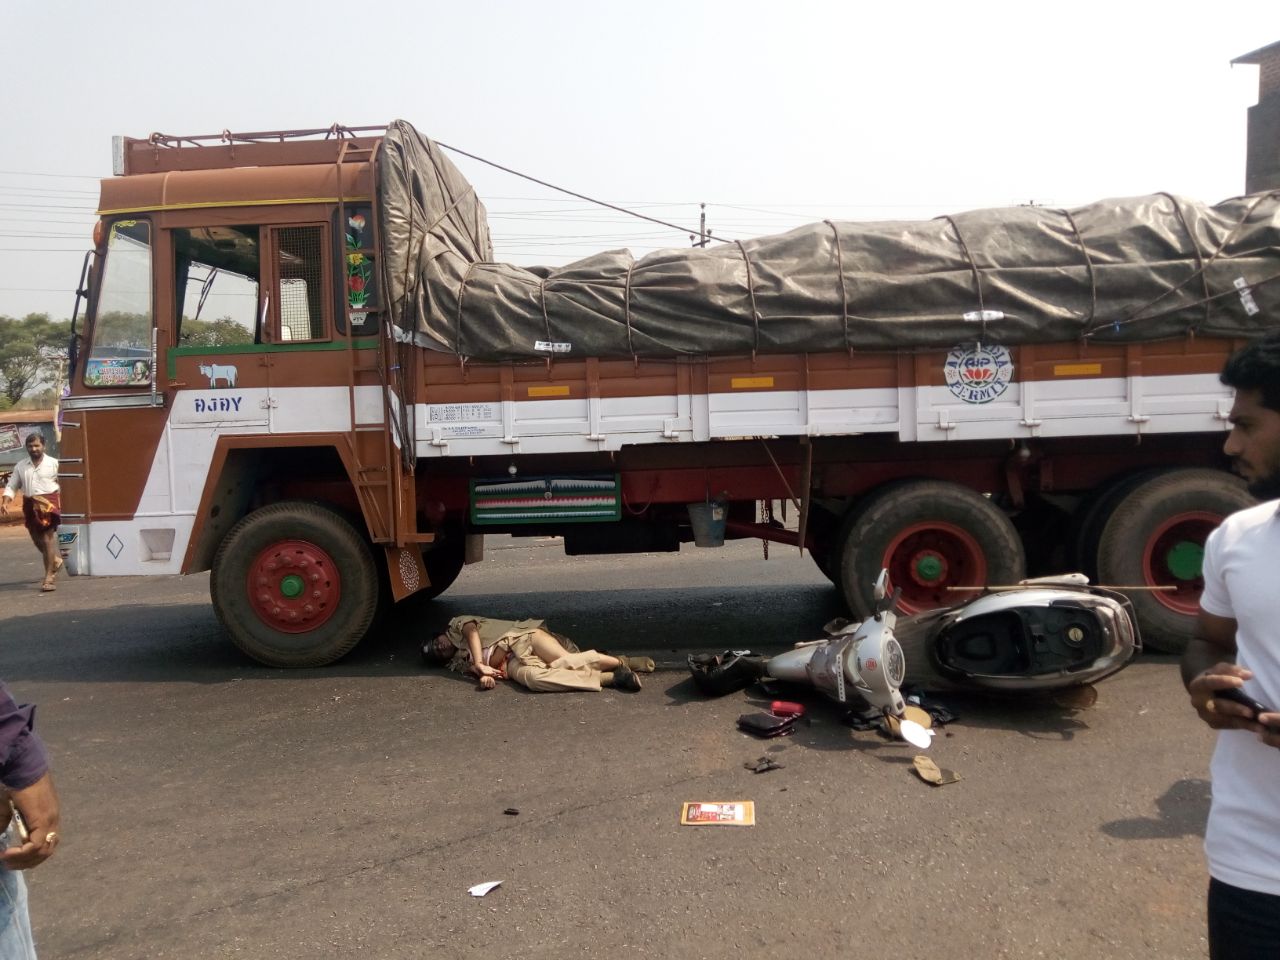 A speeding truck hit two wheeler at Murdeshwar - police constable killed on the spot